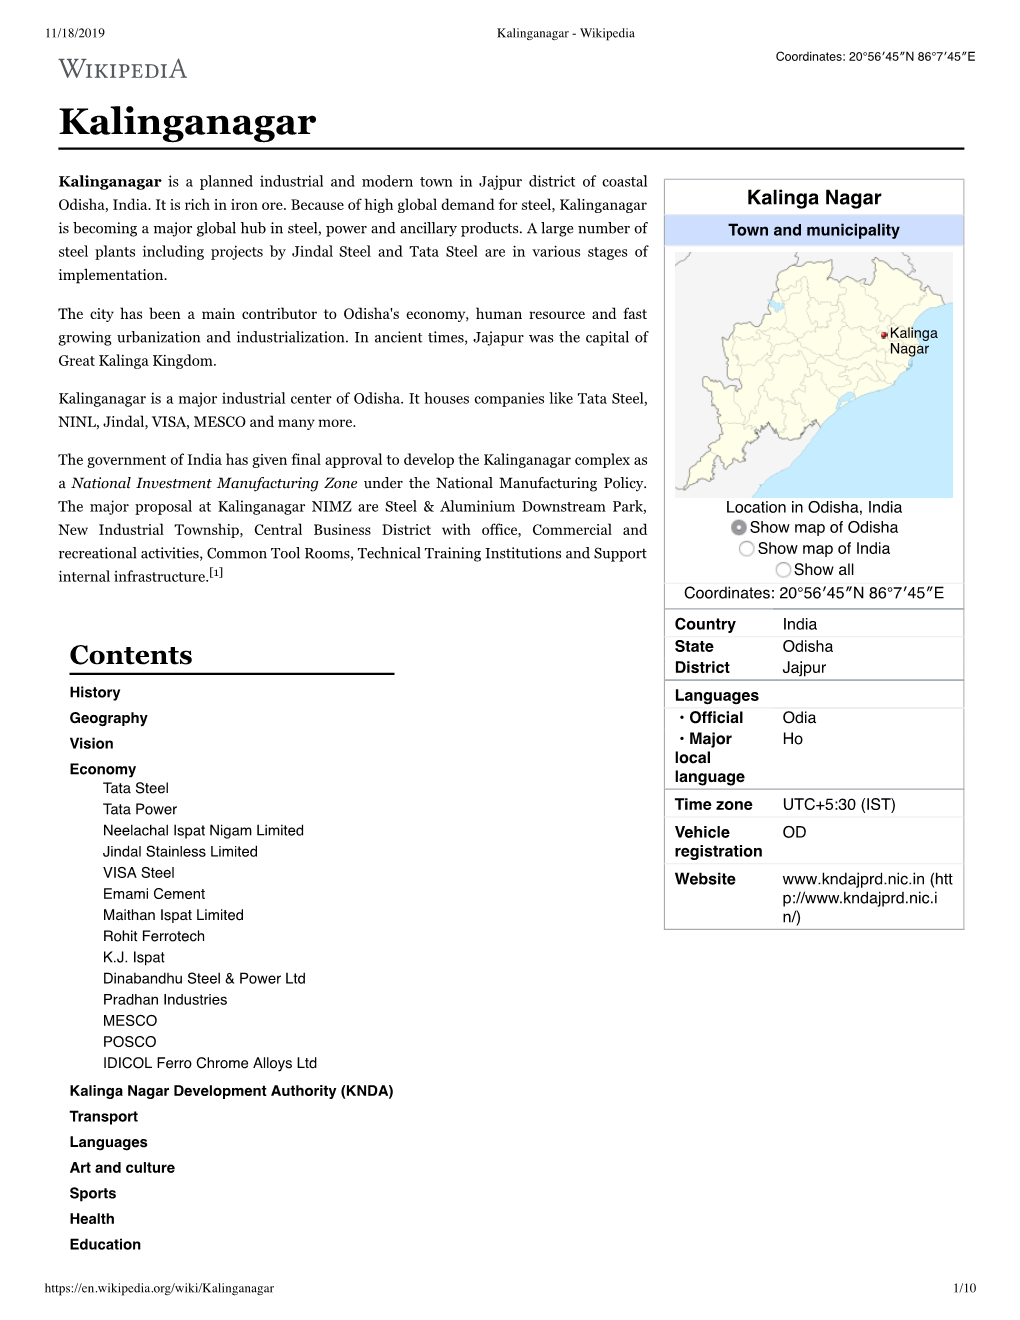 Kalinganagar - Wikipedia Coordinates: 20°56′45″N 86°7′45″E